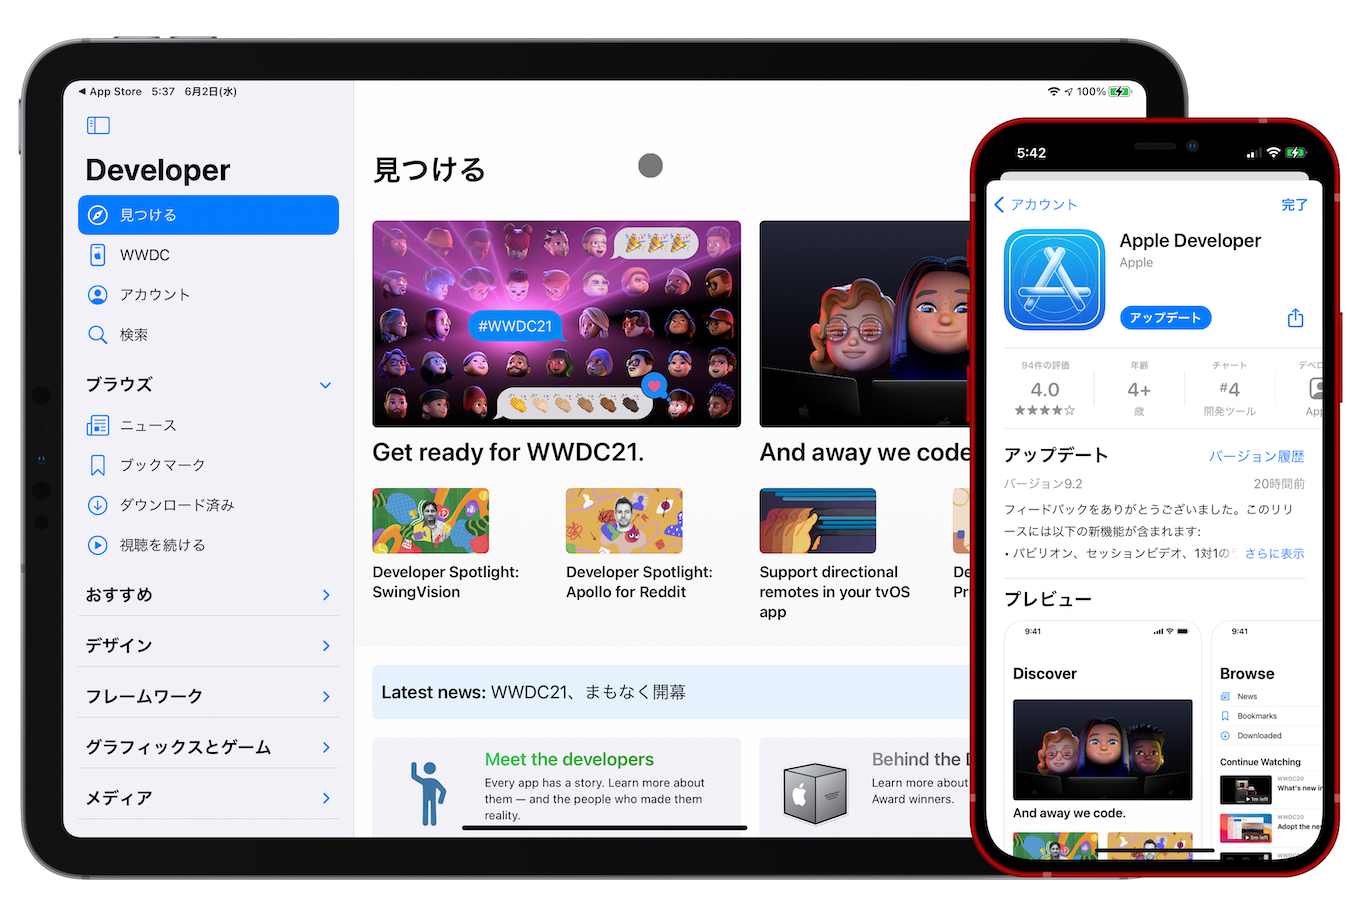 ‎Apple Developer for iOS/iPadOS WWDC21